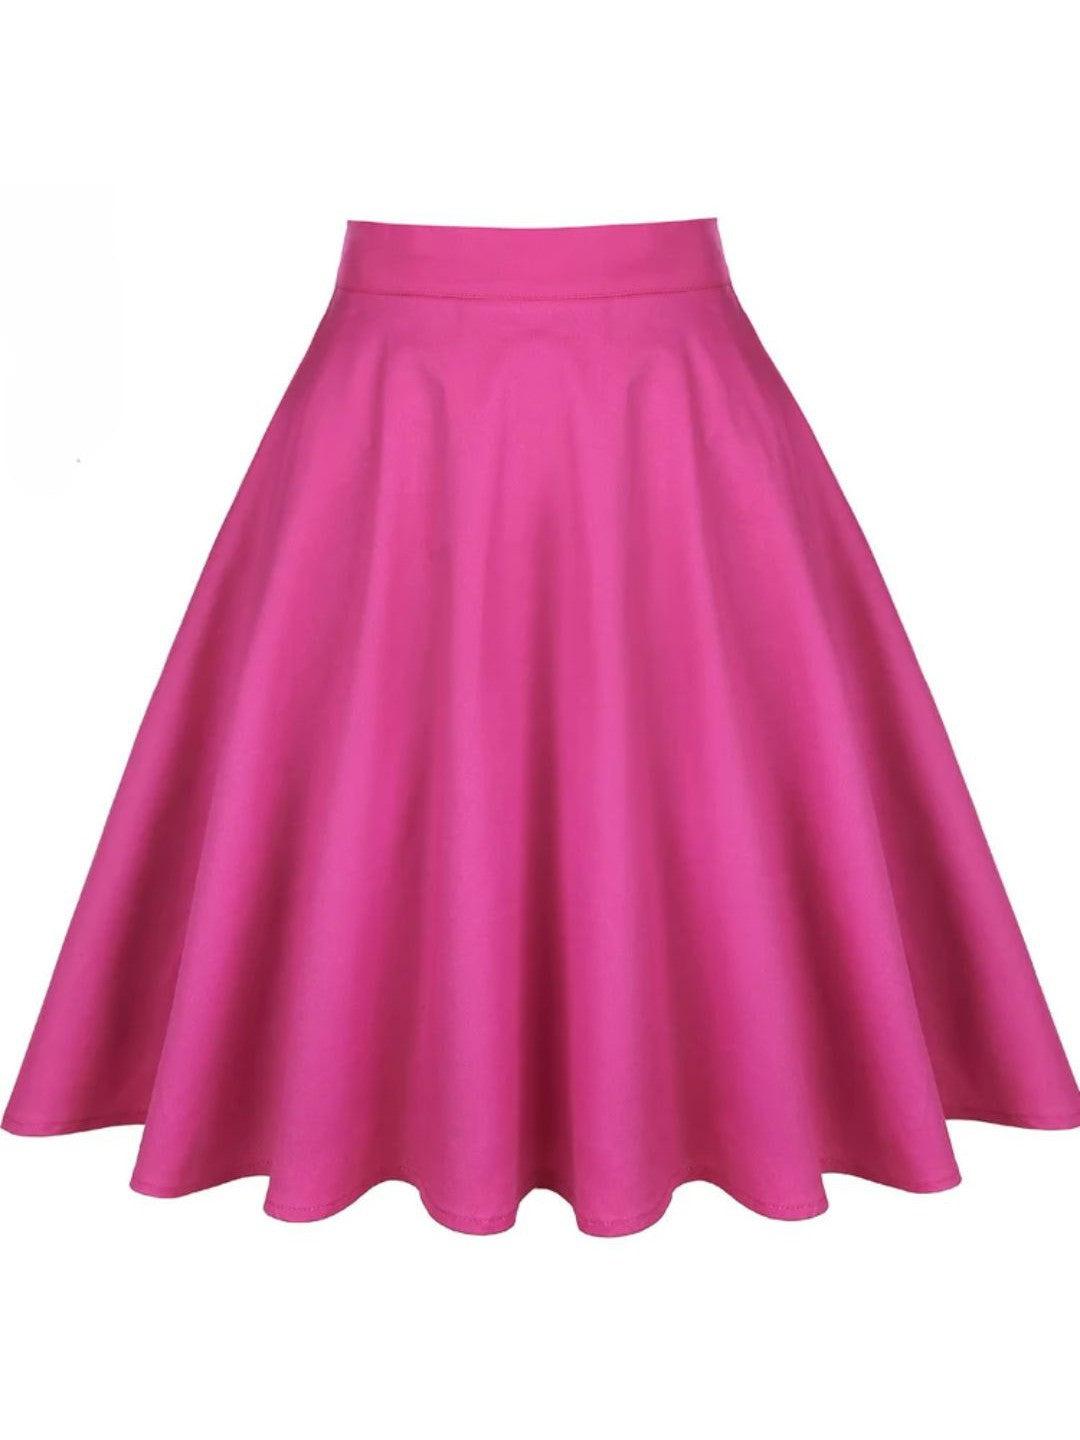 Hot Pink Flared Skirt